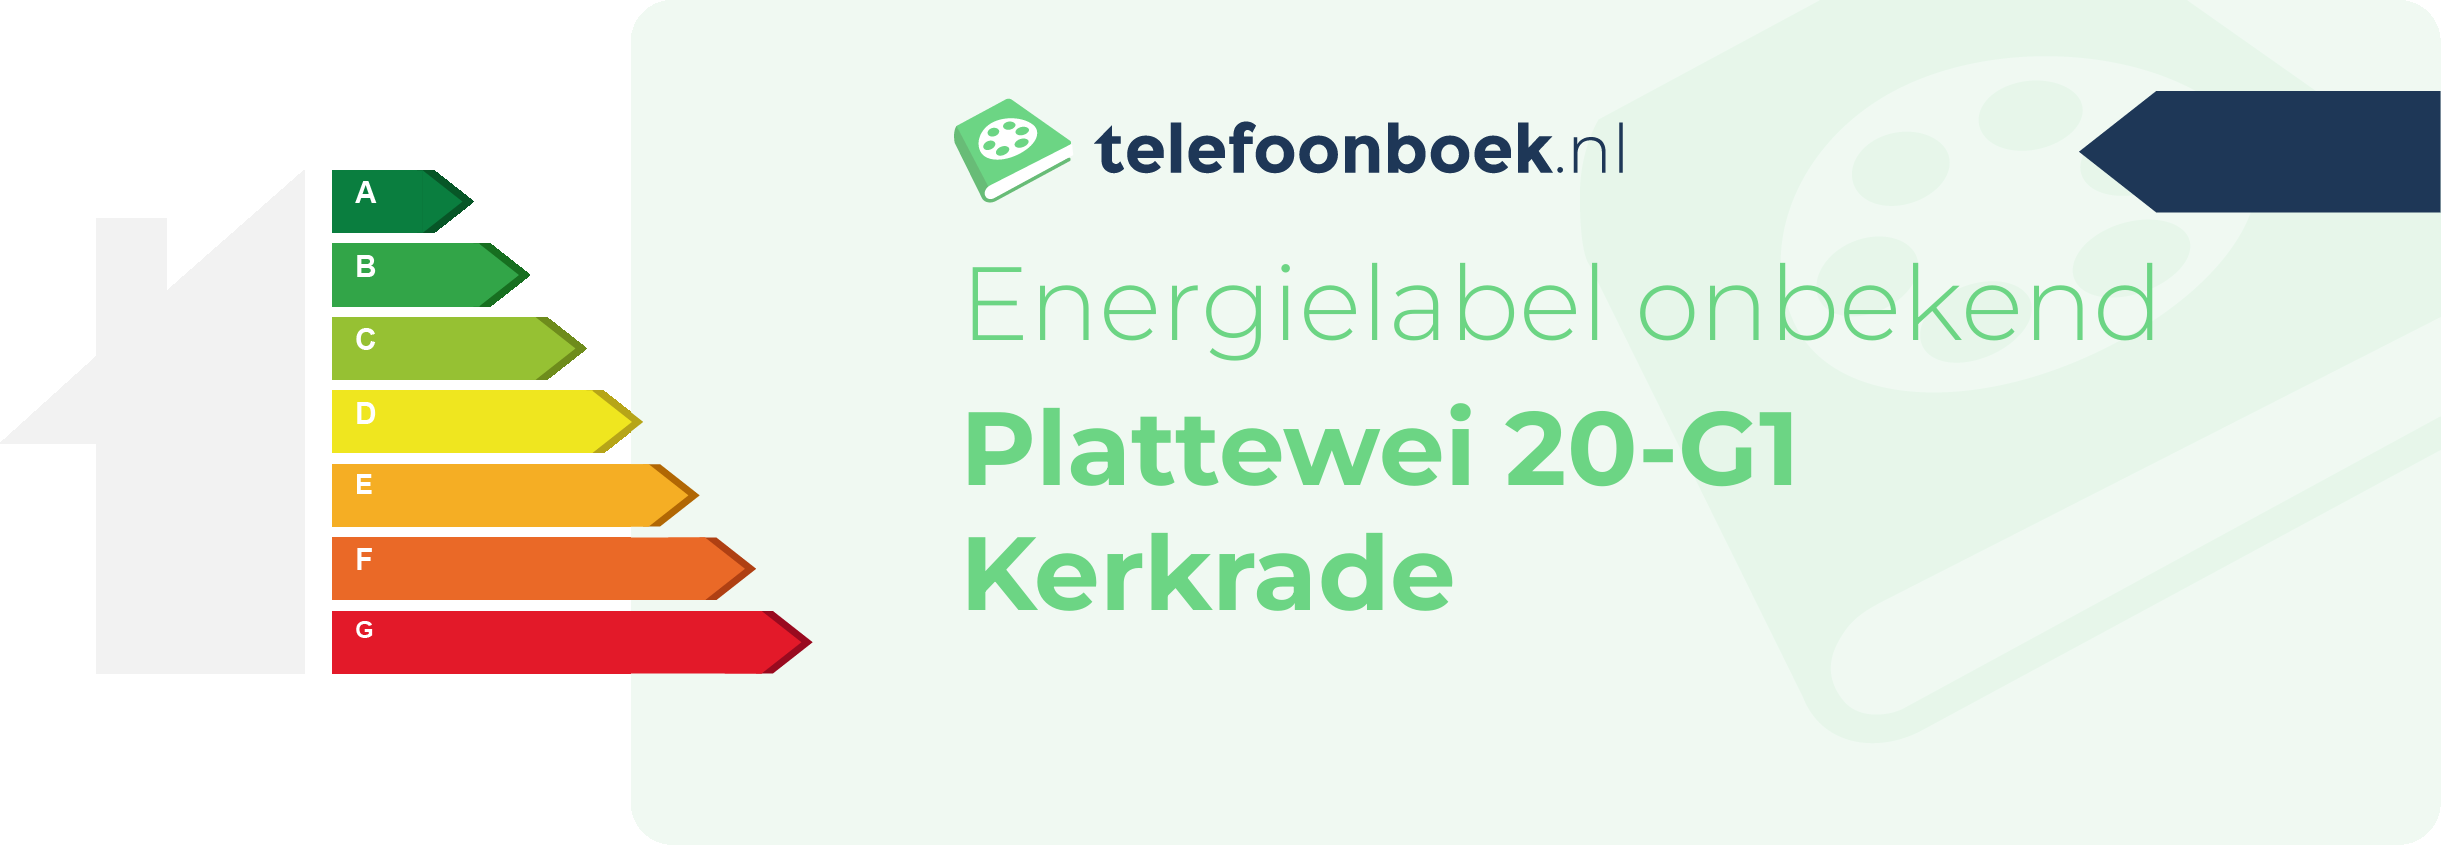 Energielabel Plattewei 20-G1 Kerkrade